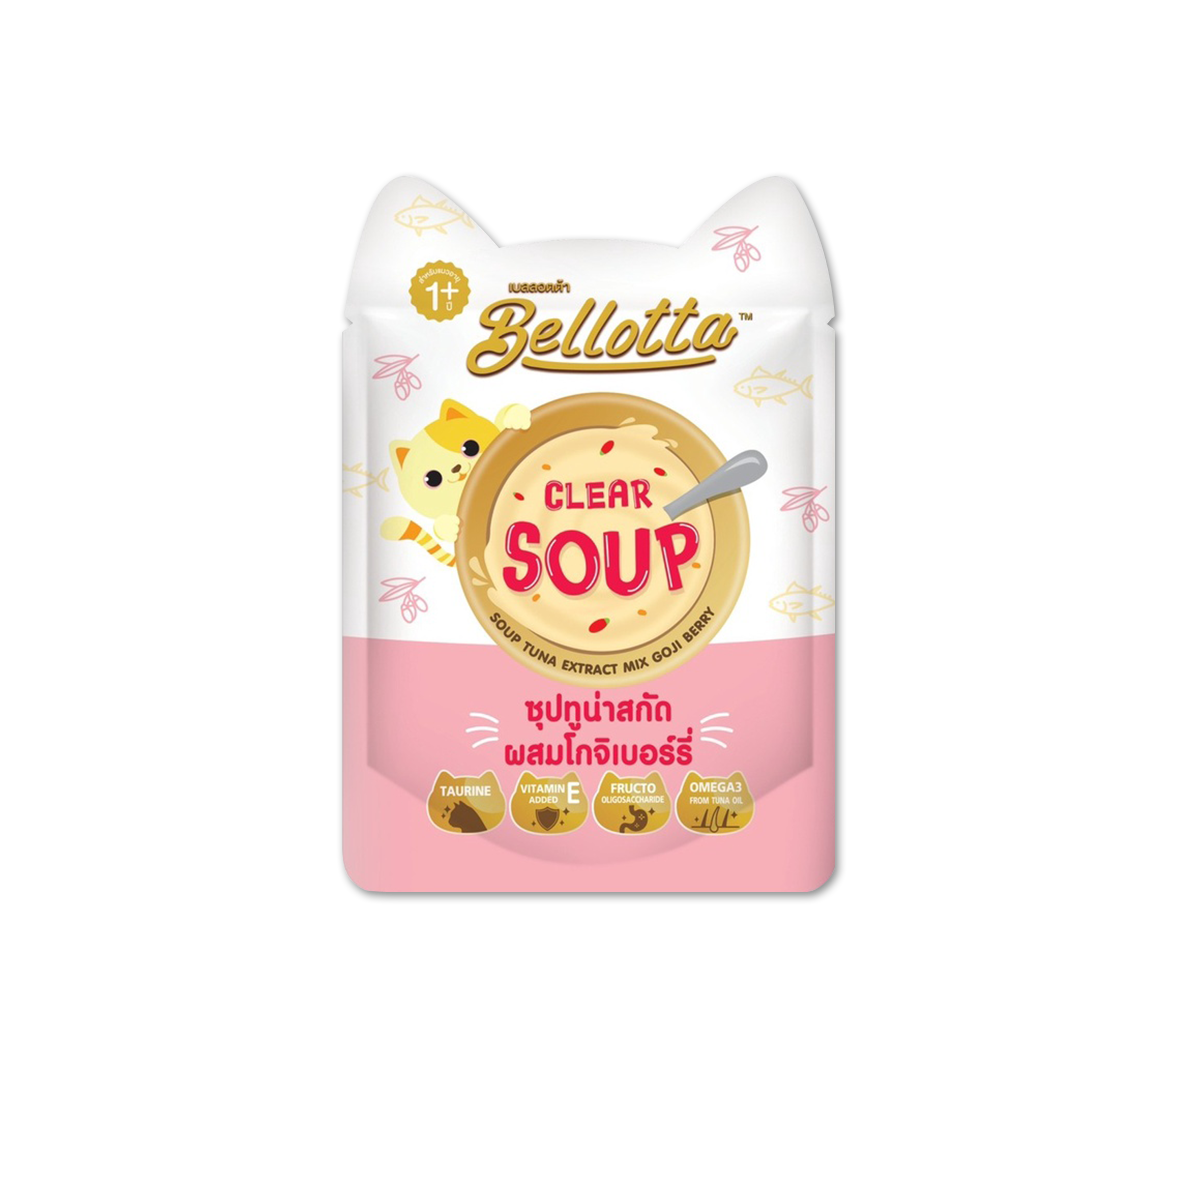 Bellotta Clear Soup Tuna Extract mix Goji Berry เบลลอตต้า ชนิดน้ำซุปซอง รสทูน่าสกัดและโกจิเบอร์รี่ ขนาด 40 กรัม (12 ซอง)